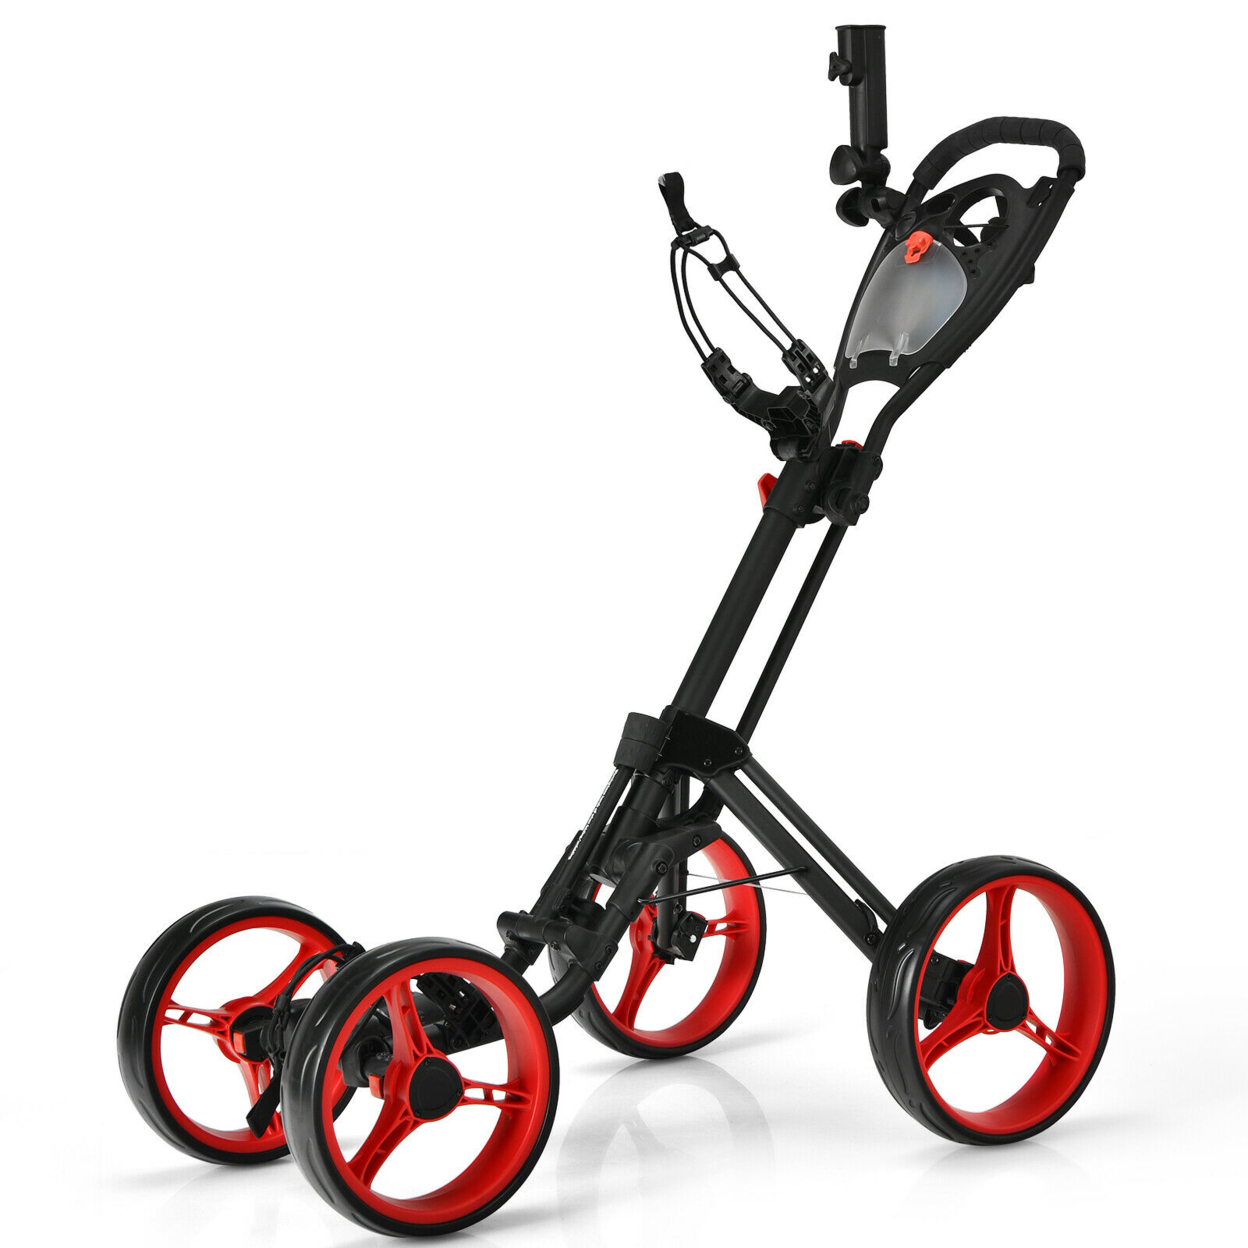 4 Wheels Folding Golf Push Cart W/ Adjustable Handle Foot Brake - Green